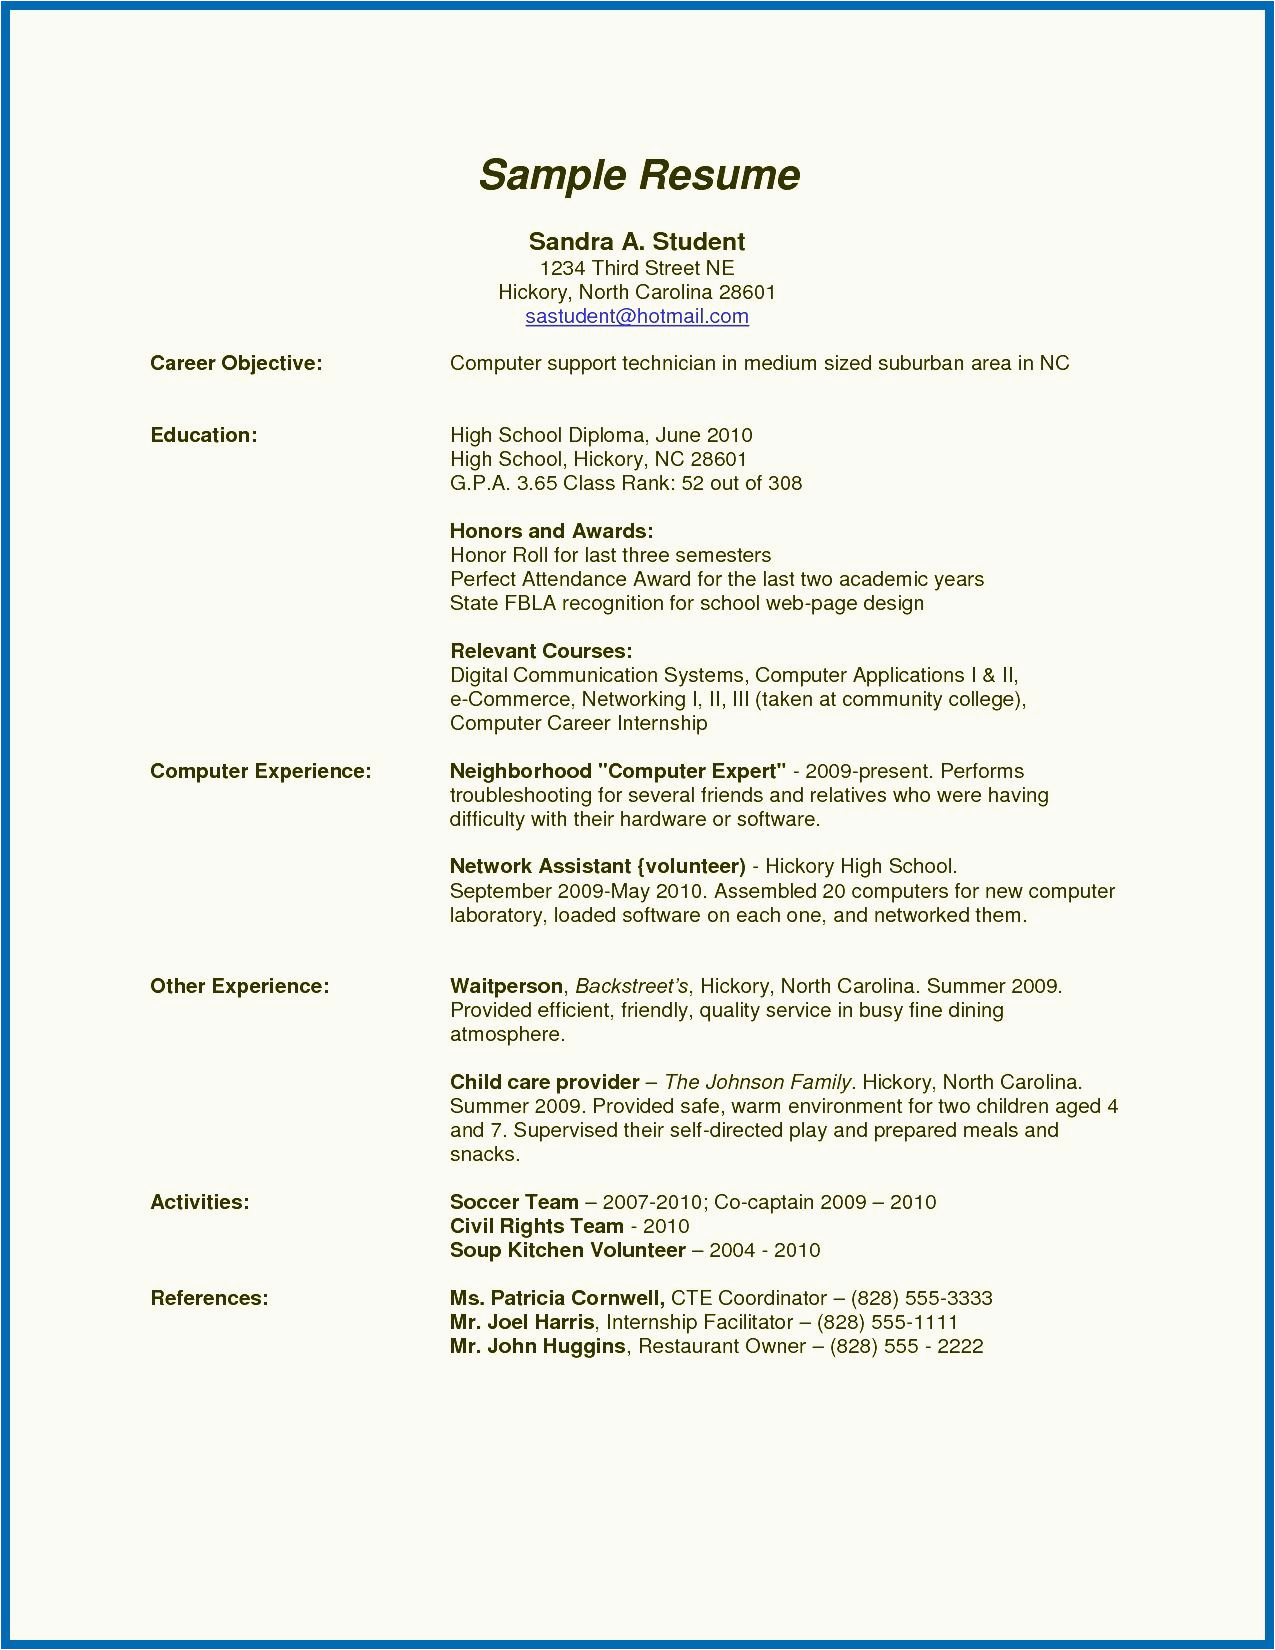 Sample High School Student Resume for Summer Job 11 12 High School Resume for Summer Job Aikenexplorer